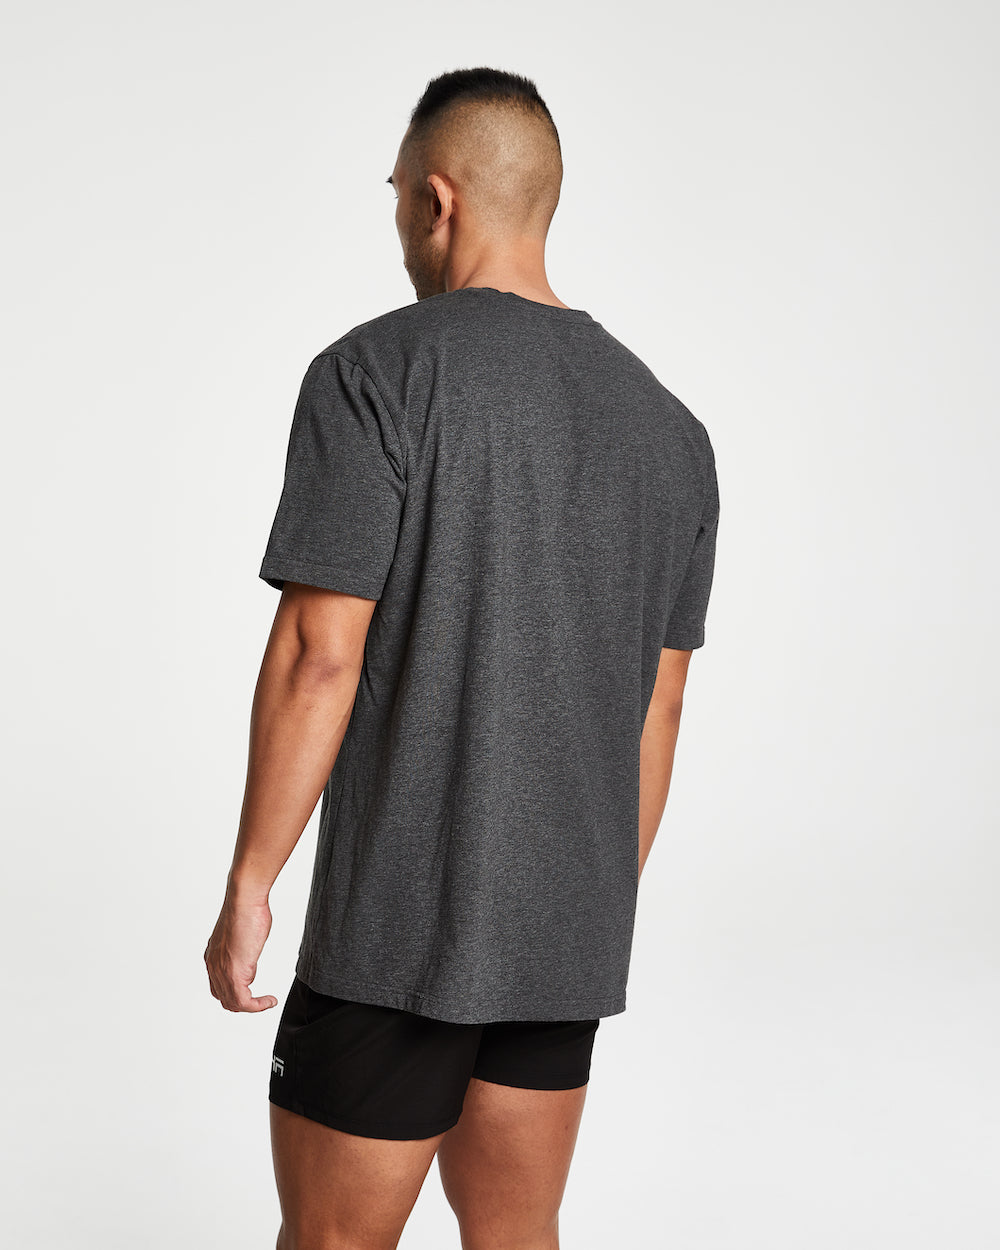 Aro Essential Gym T-Shirt - Charcoal Grey